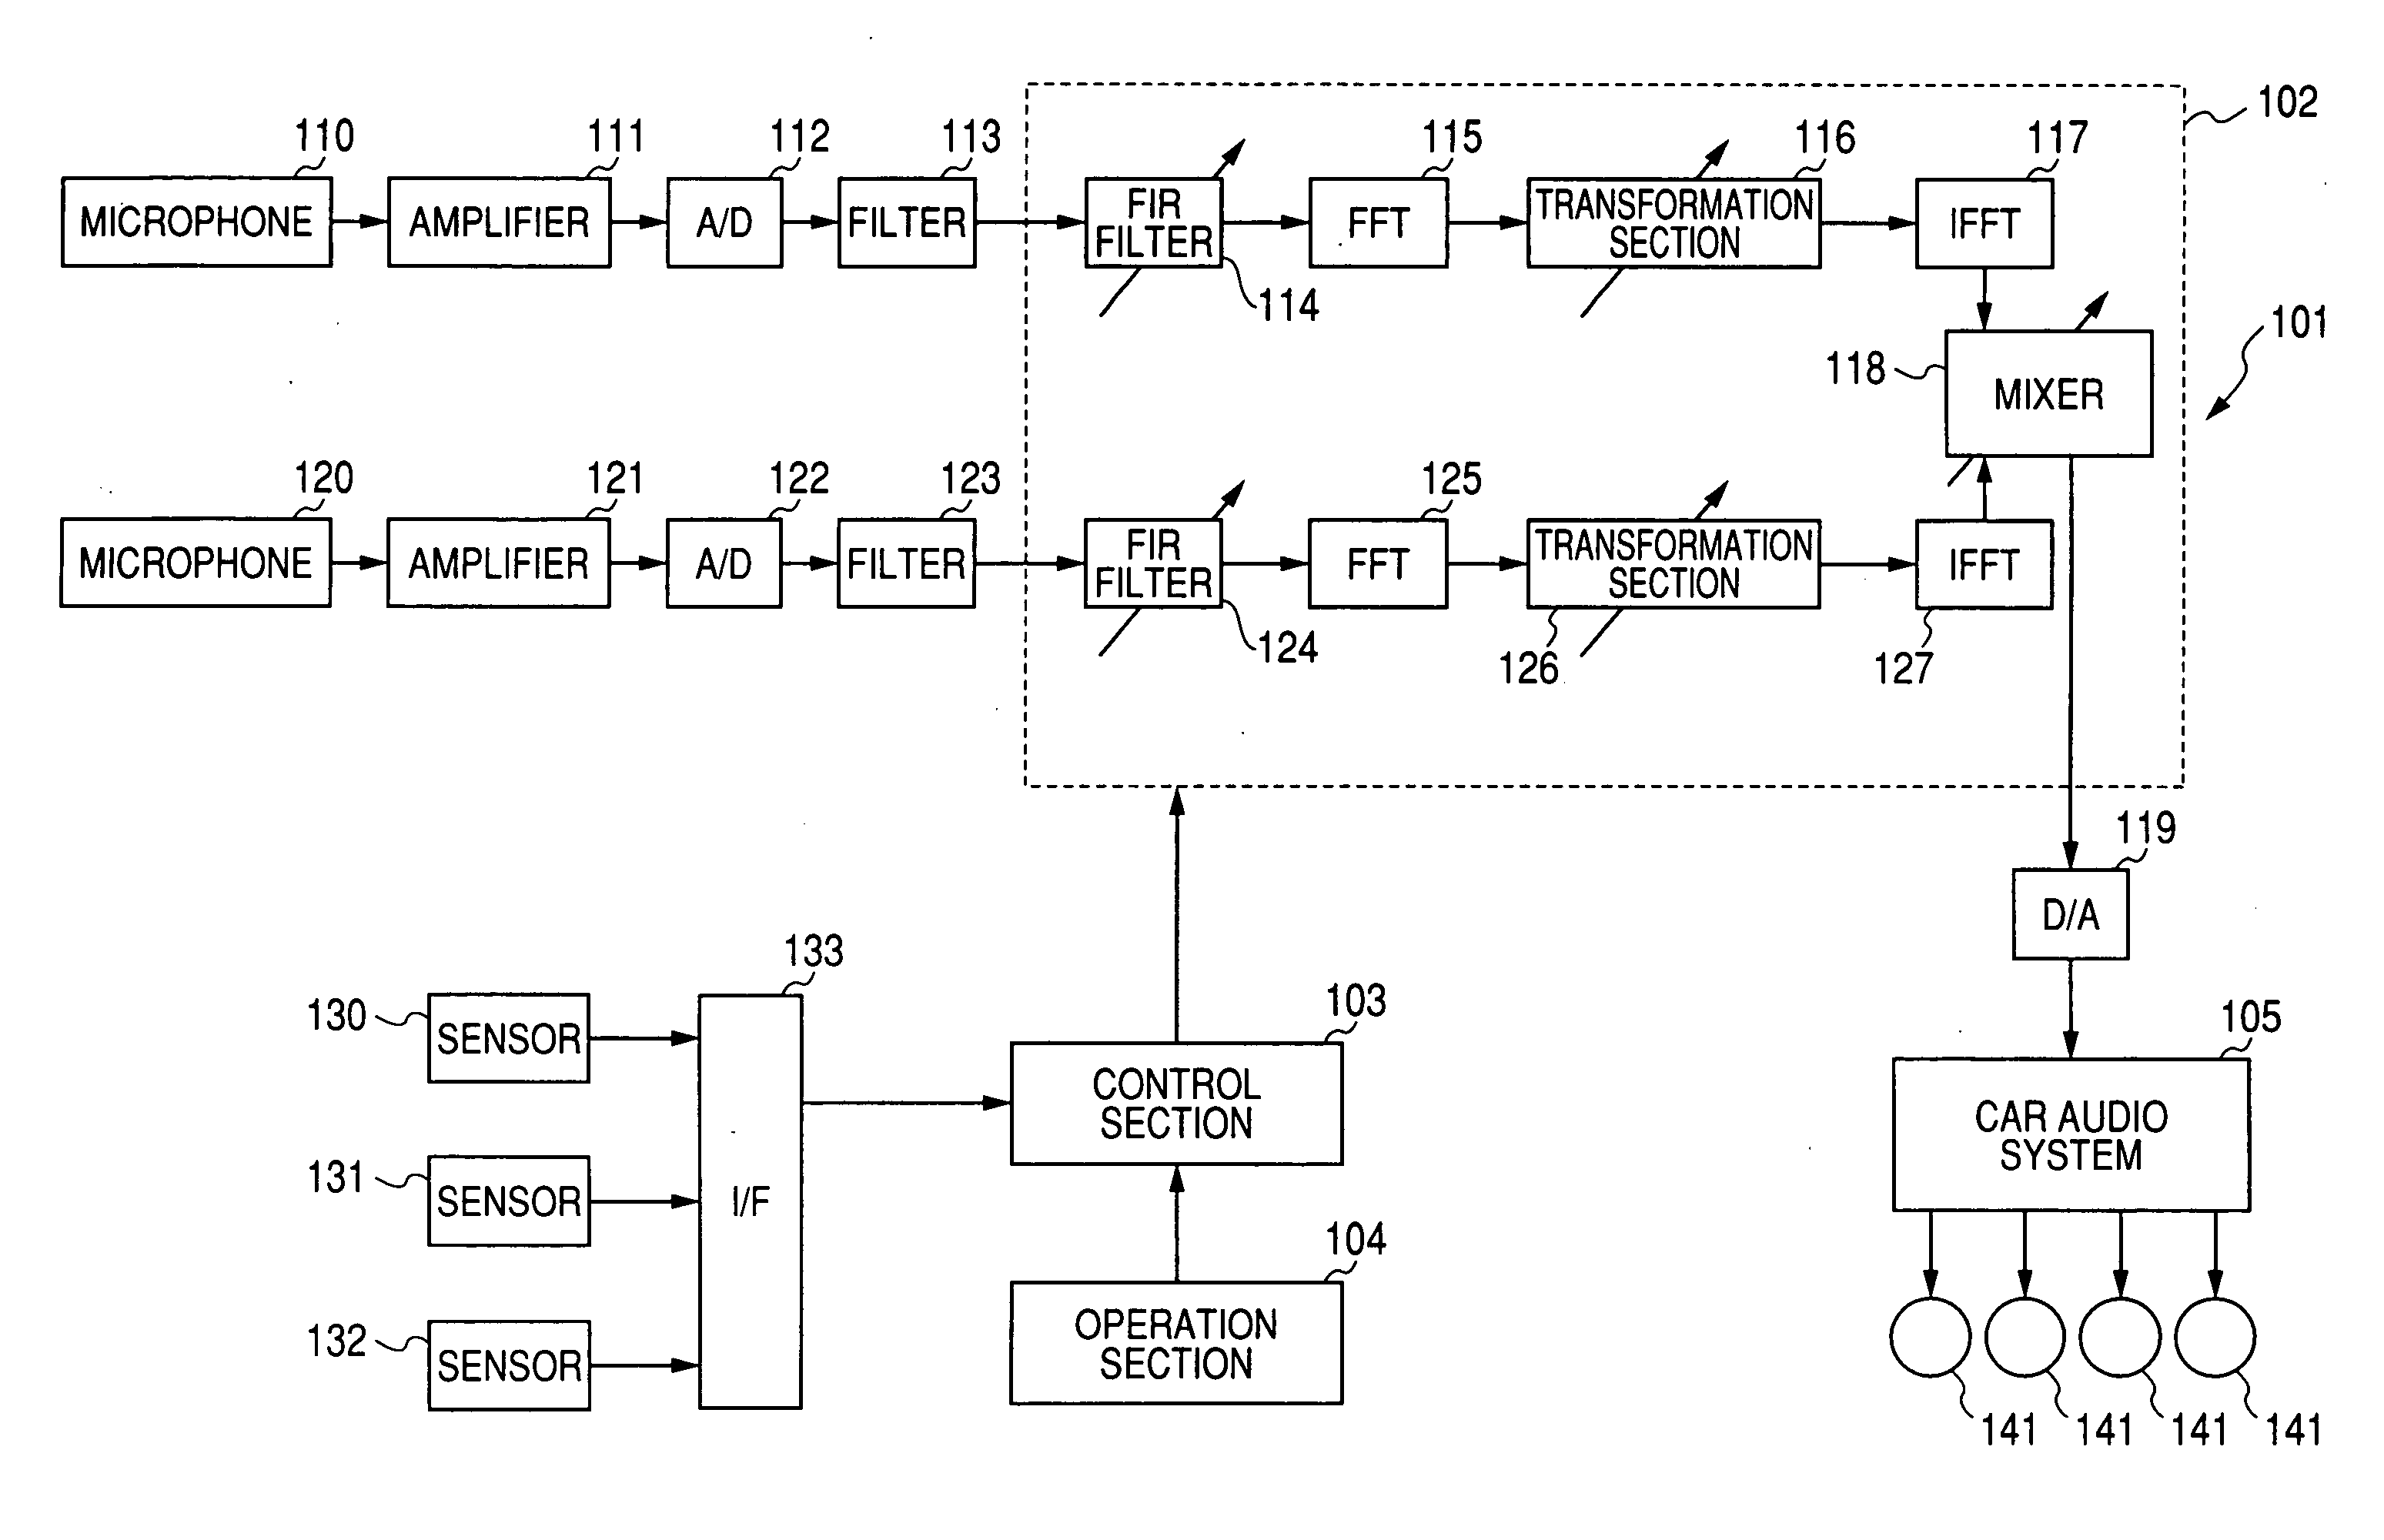 Engine Sound Processing System